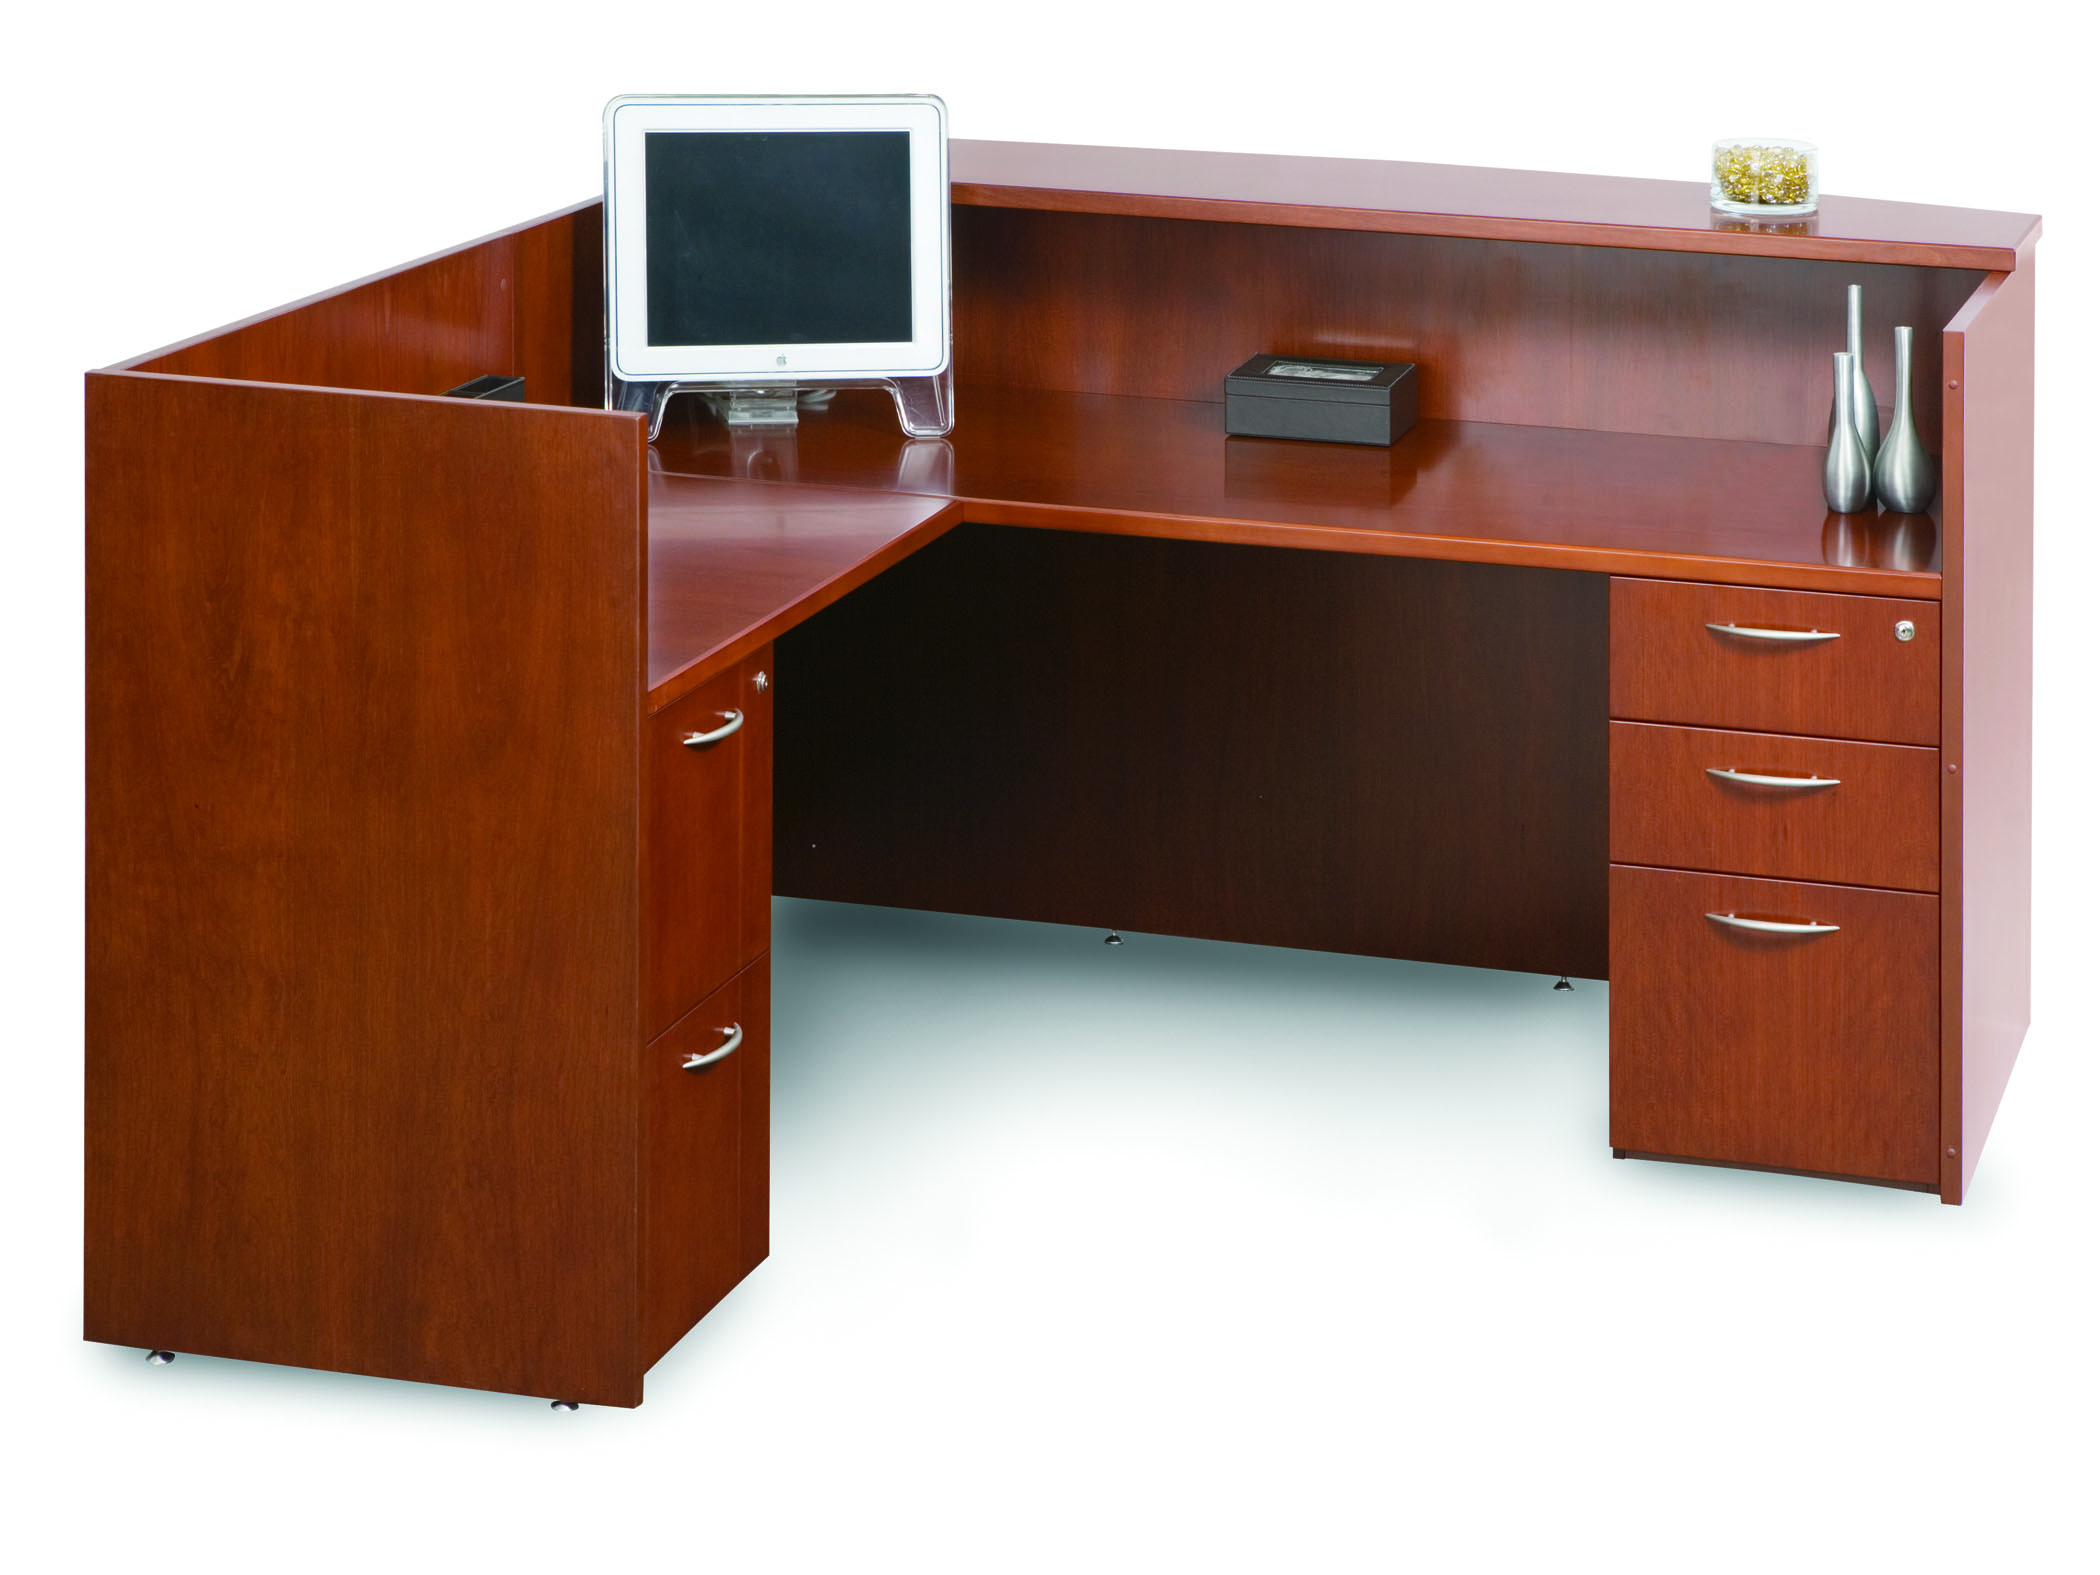 Reception Area Furniture from Compel - Insignia reception desk - back view